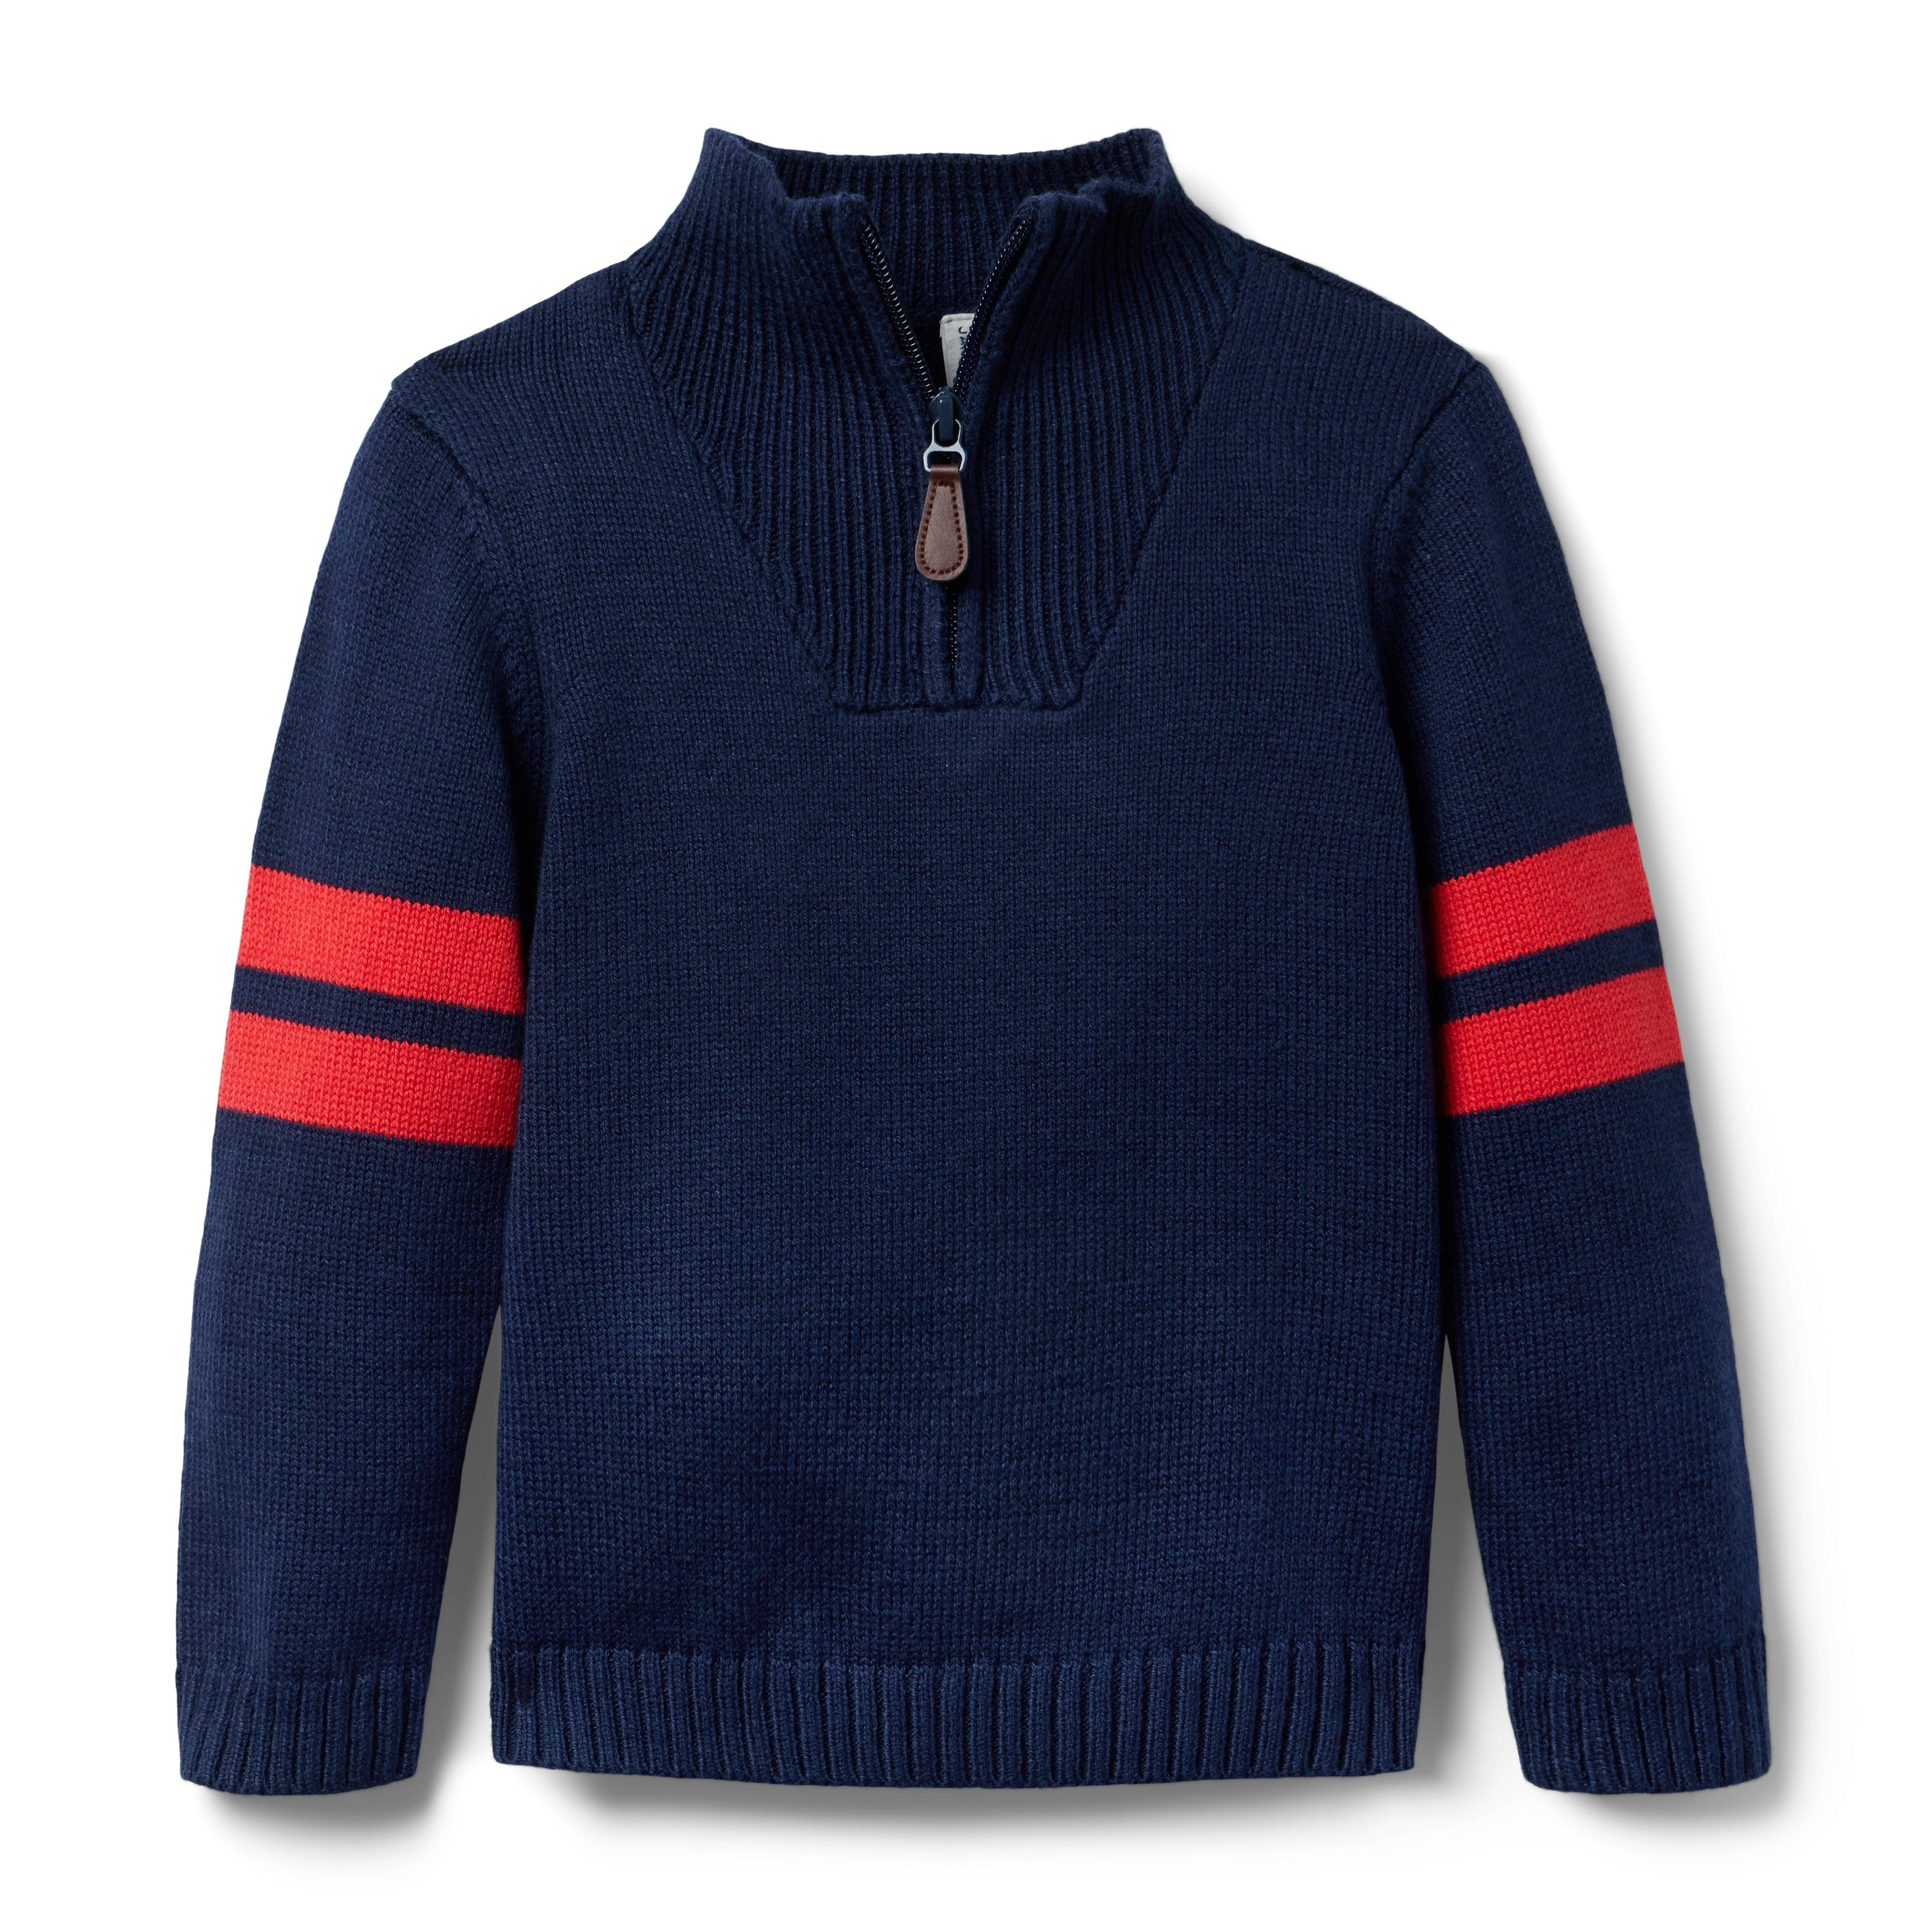 The Stripe Half-Zip Sweater